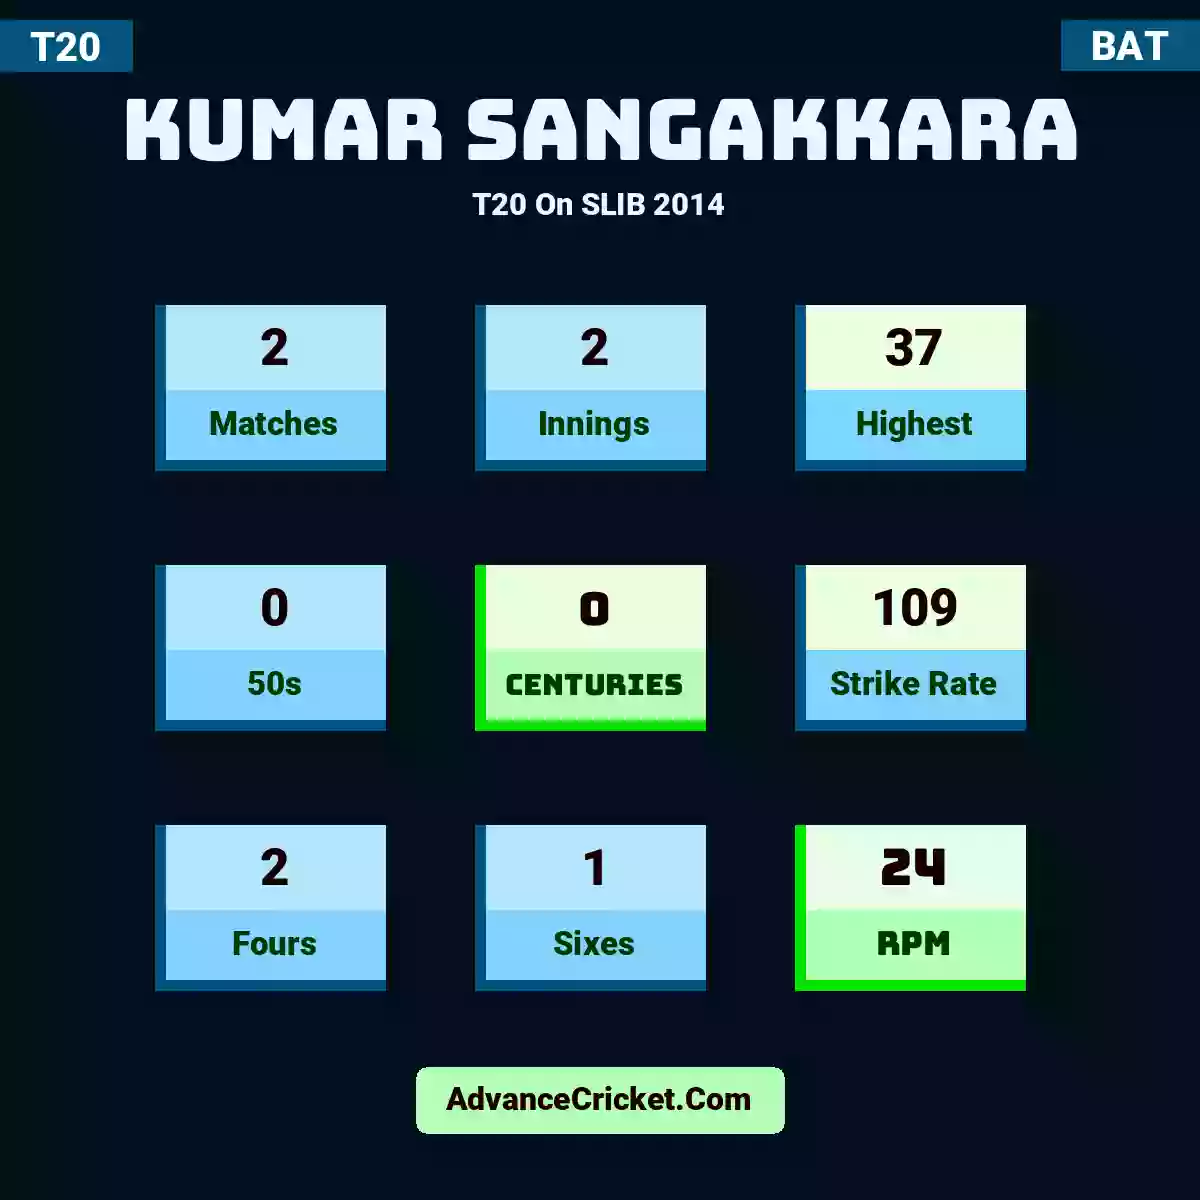 Kumar Sangakkara T20  On SLIB 2014, Kumar Sangakkara played 2 matches, scored 37 runs as highest, 0 half-centuries, and 0 centuries, with a strike rate of 109. K.Sangakkara hit 2 fours and 1 sixes, with an RPM of 24.